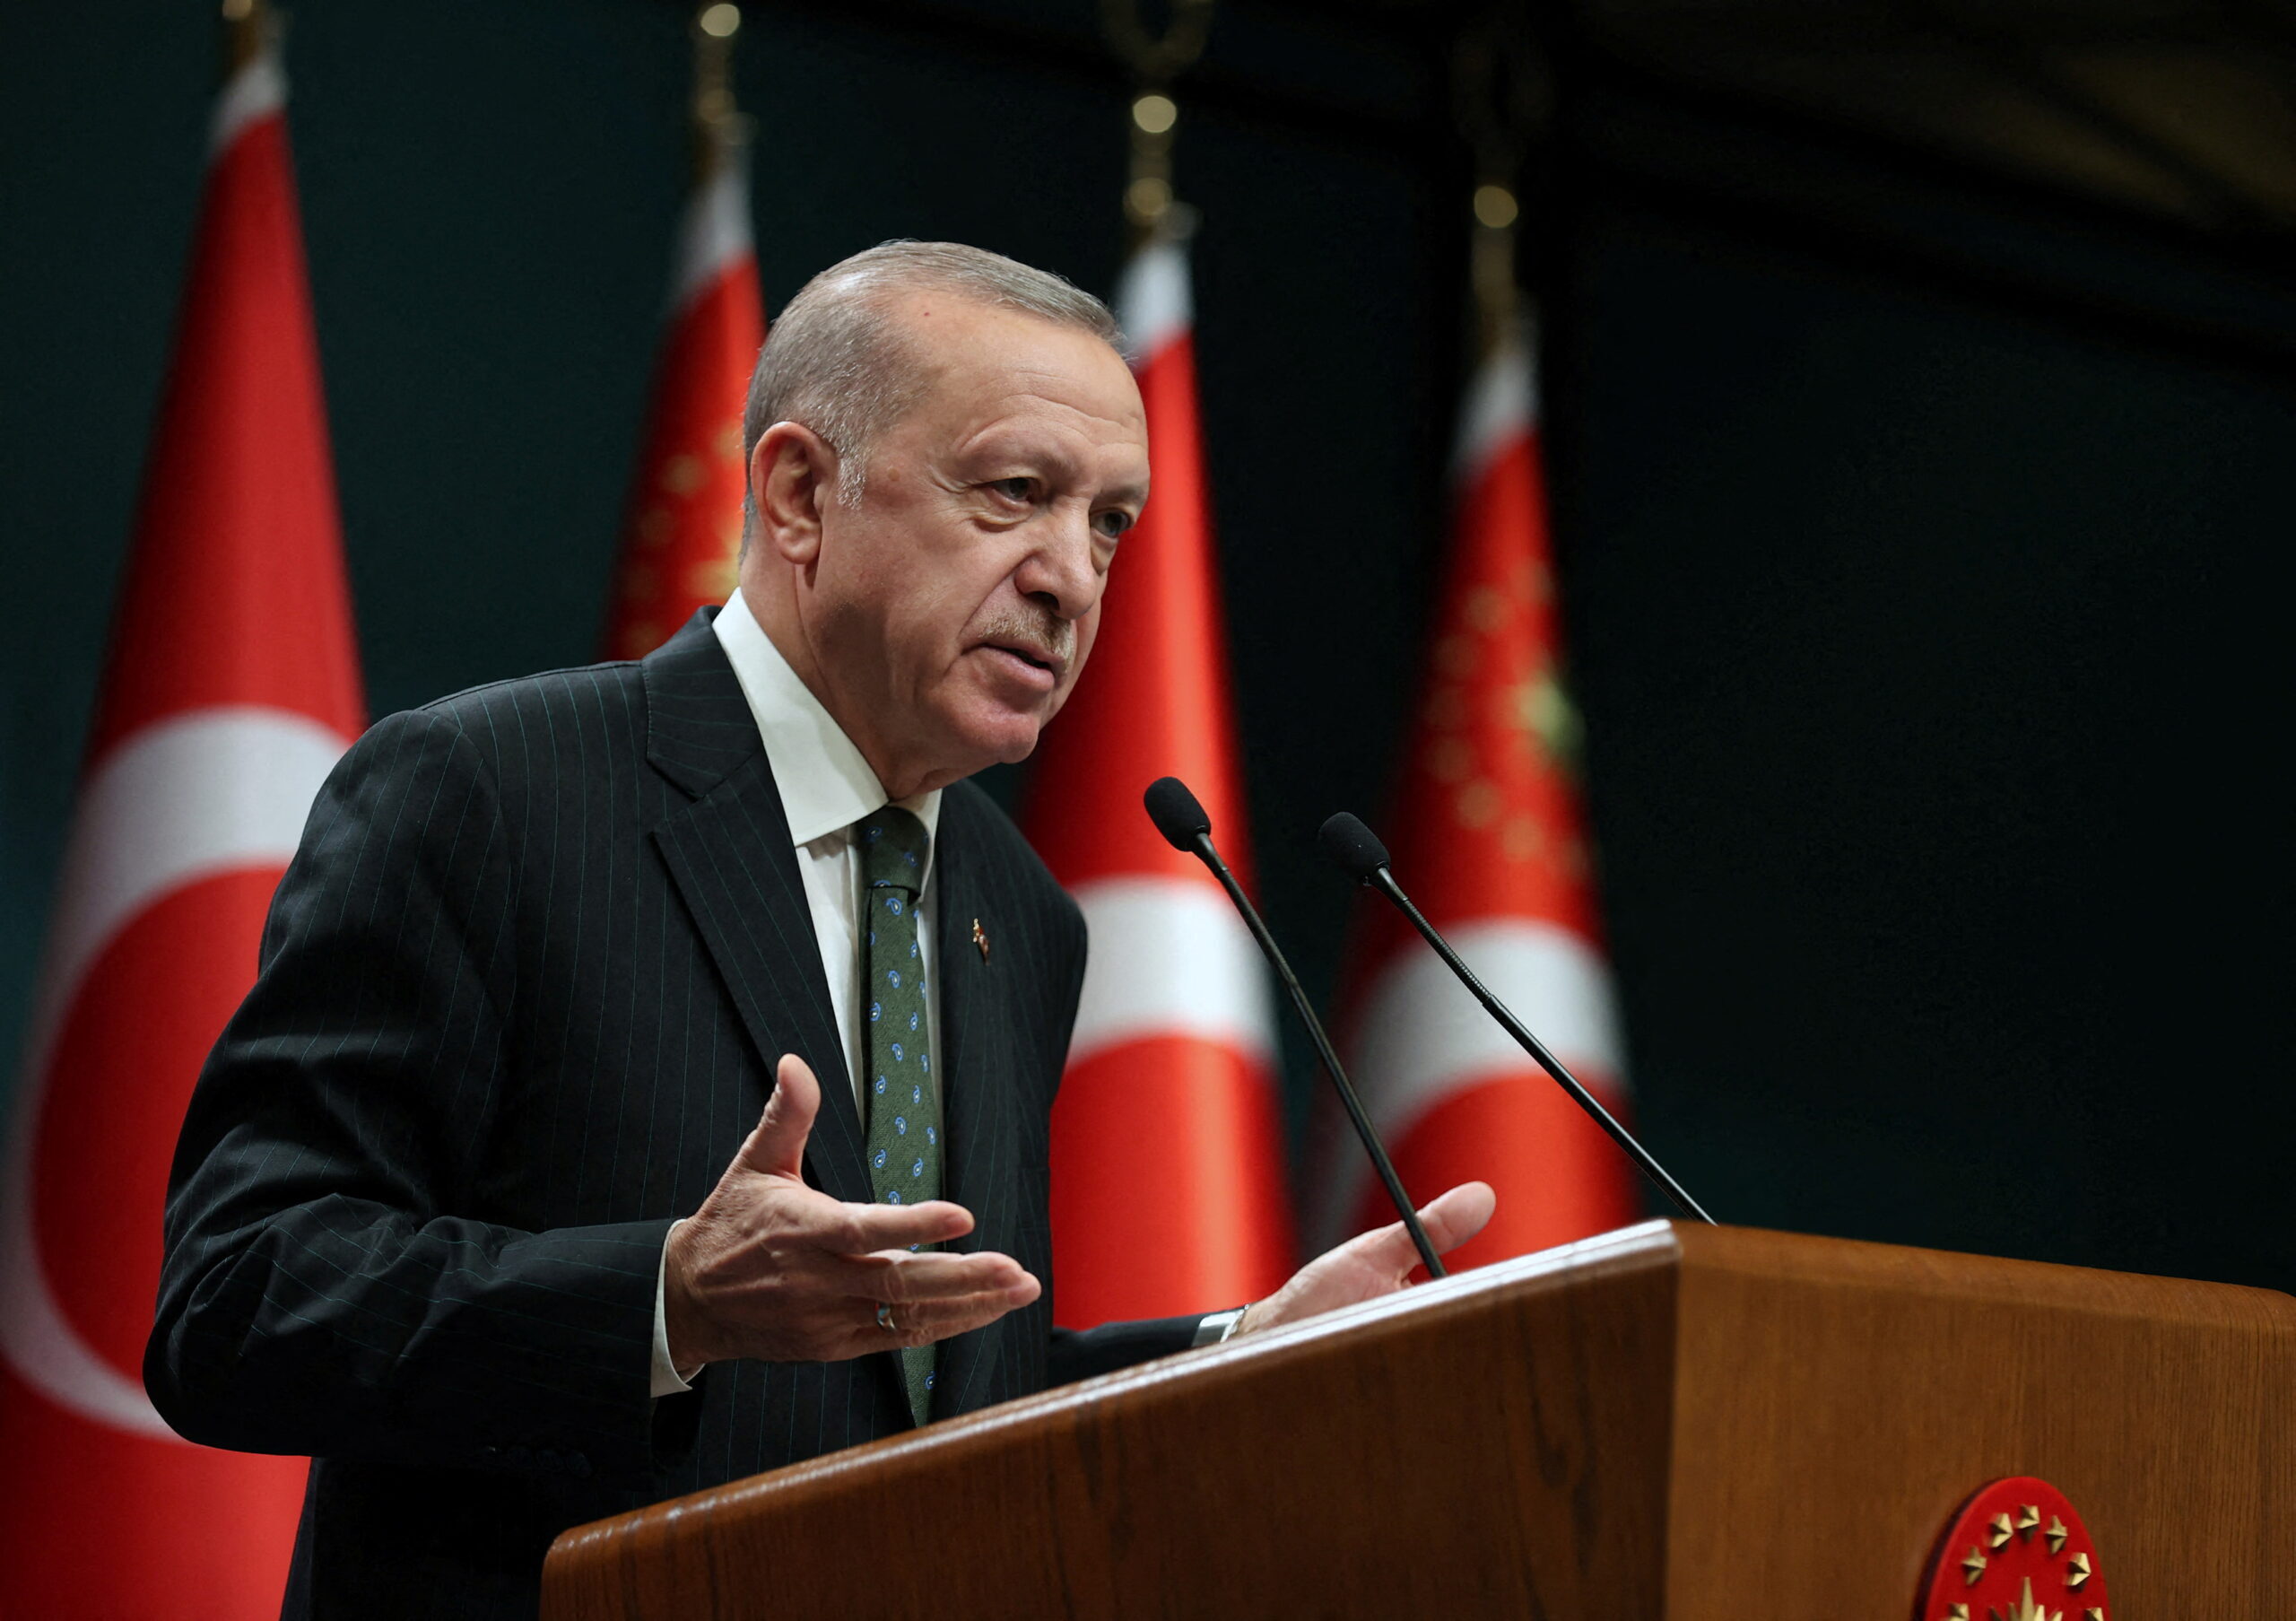 Erdogan extends Eid greetings to Malaysian PM, wishing peace for Islamic World